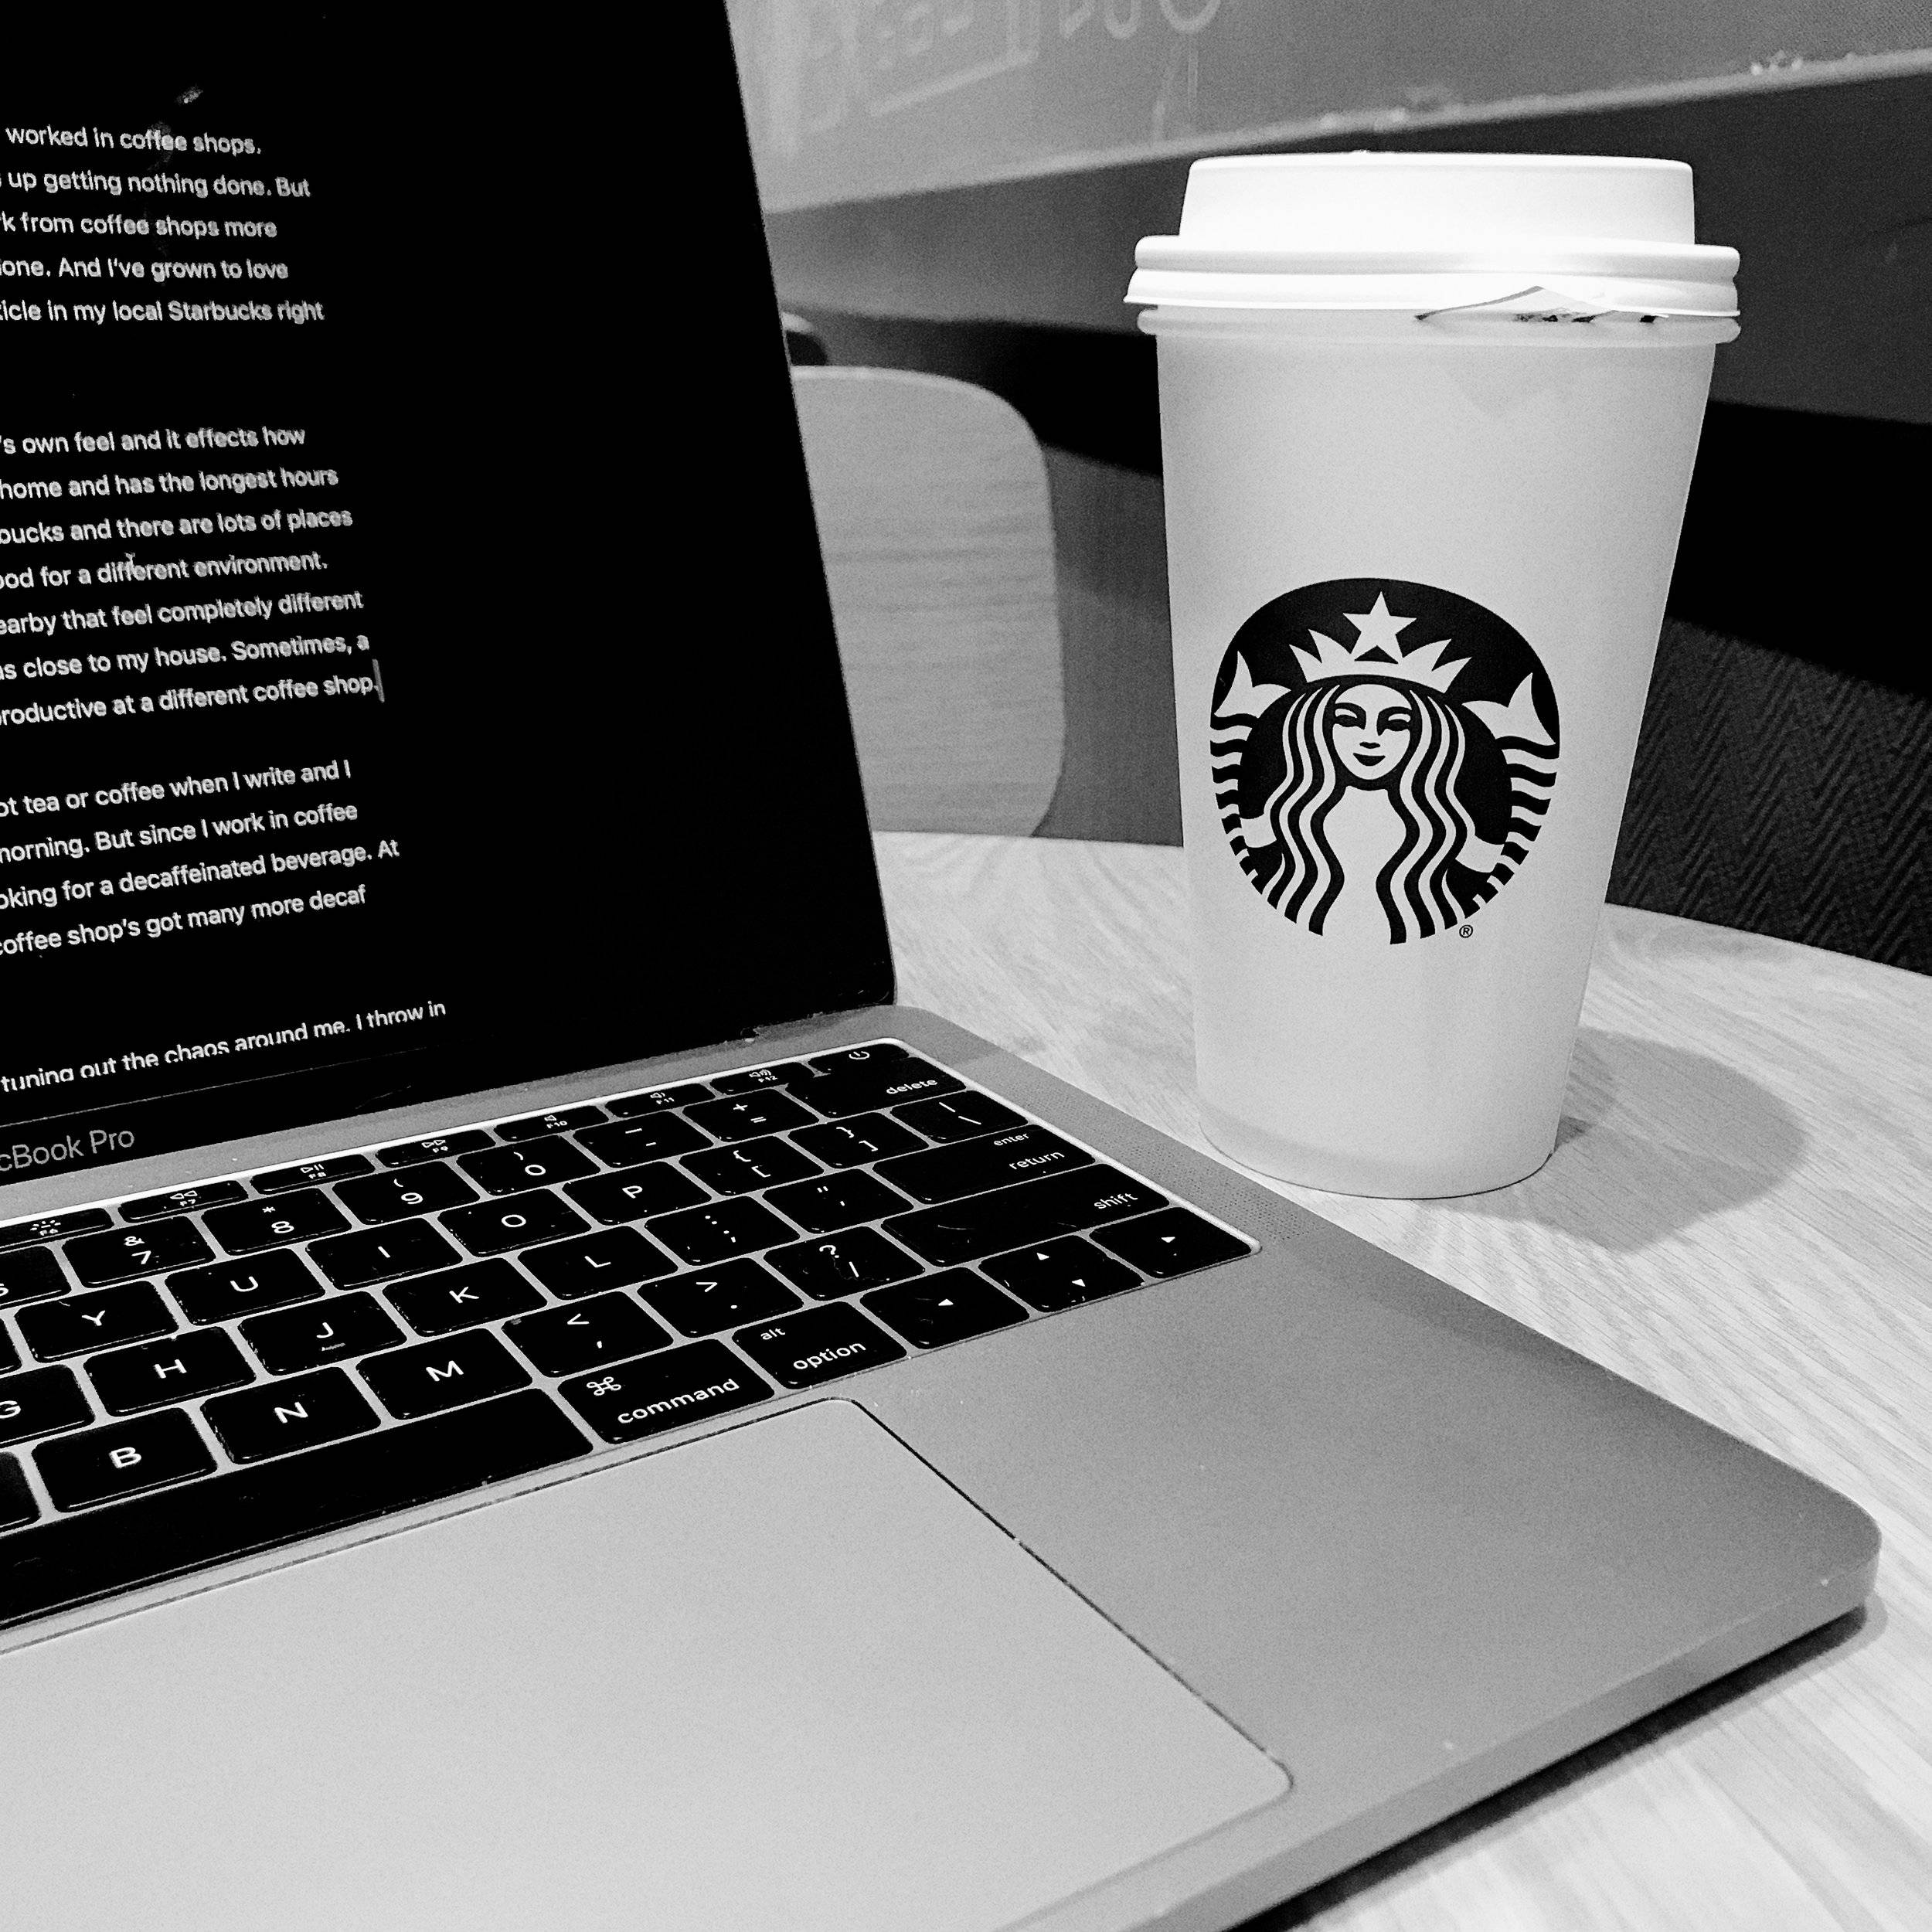 Loving Of Coffee Blog On Laptop Background